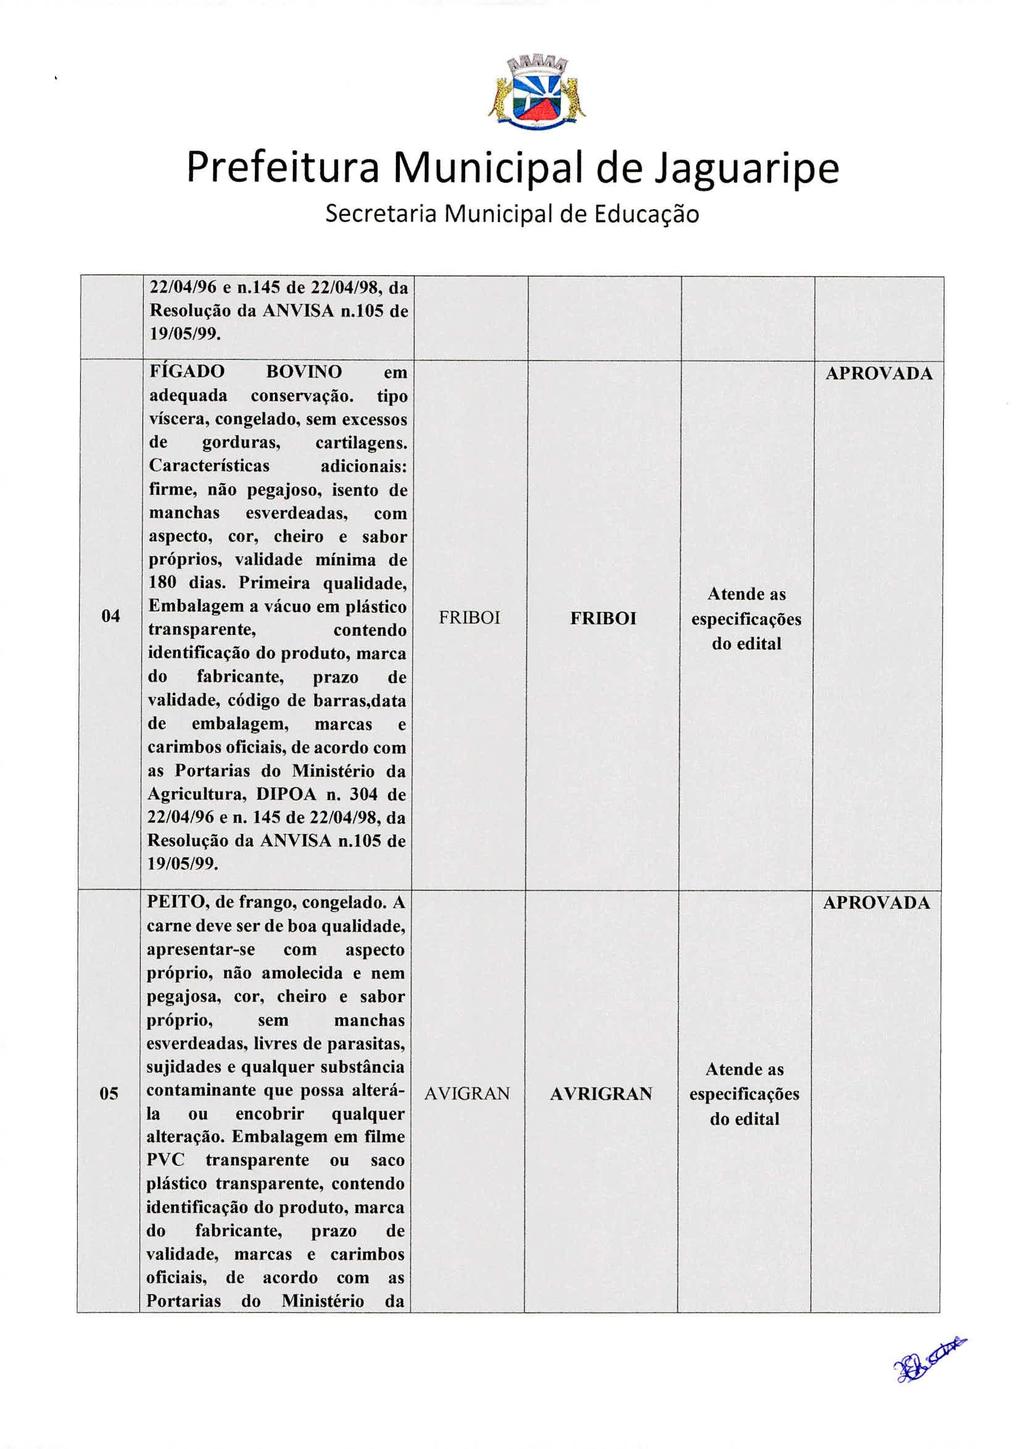 rt Prefeitura Municipal de Jaguaripe 22/04/96 e n.145 de 22/04/98, da Resolução da ANVISA n.105 de 19/05/99.